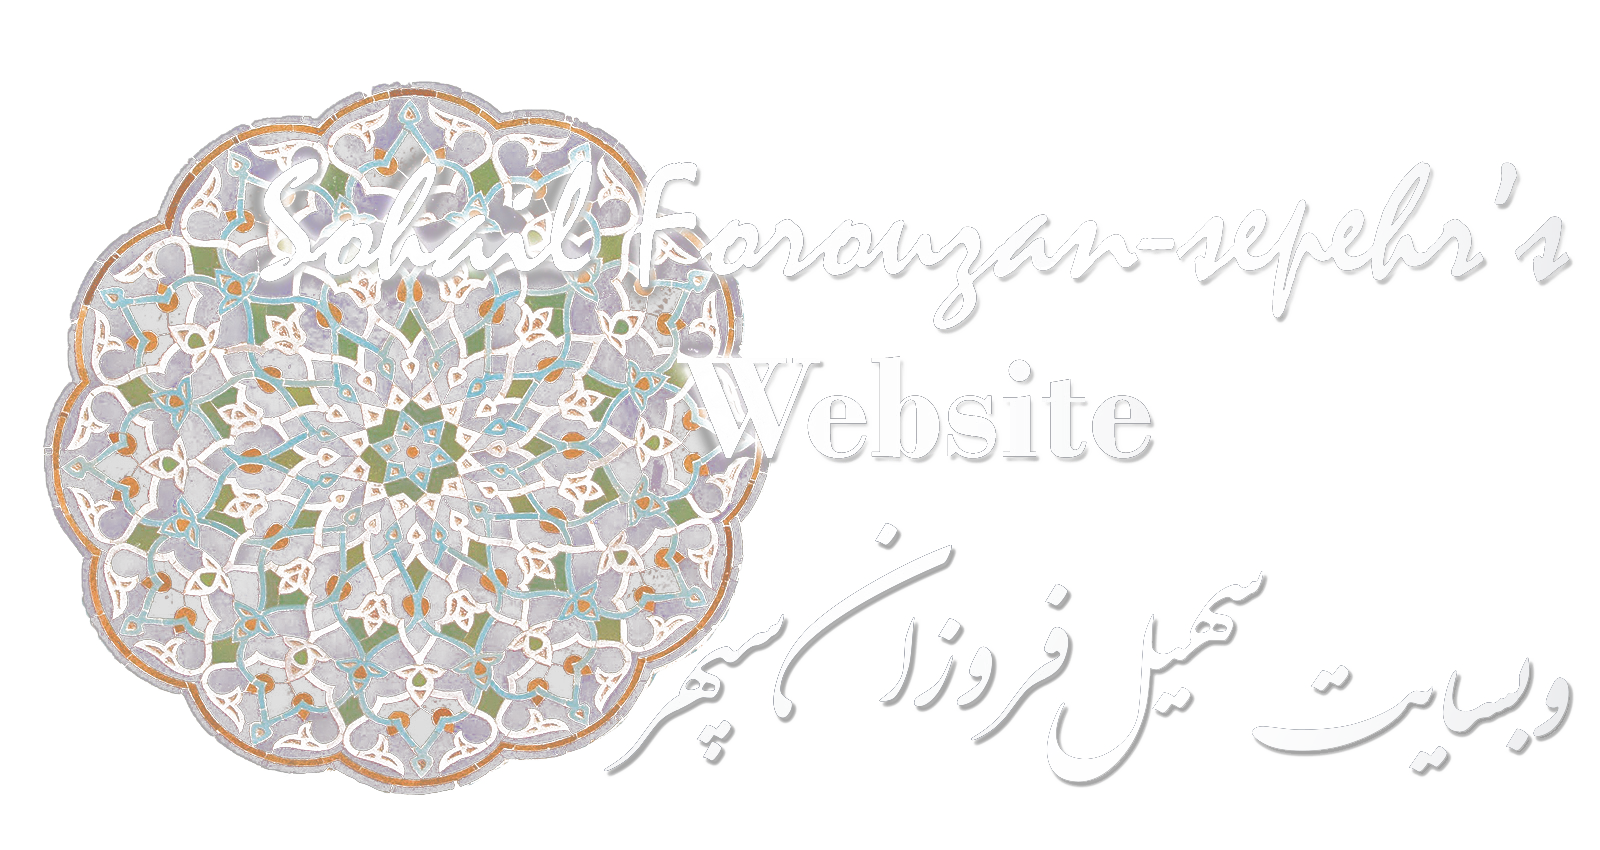 Sohail Forouzan-sepehr's Website